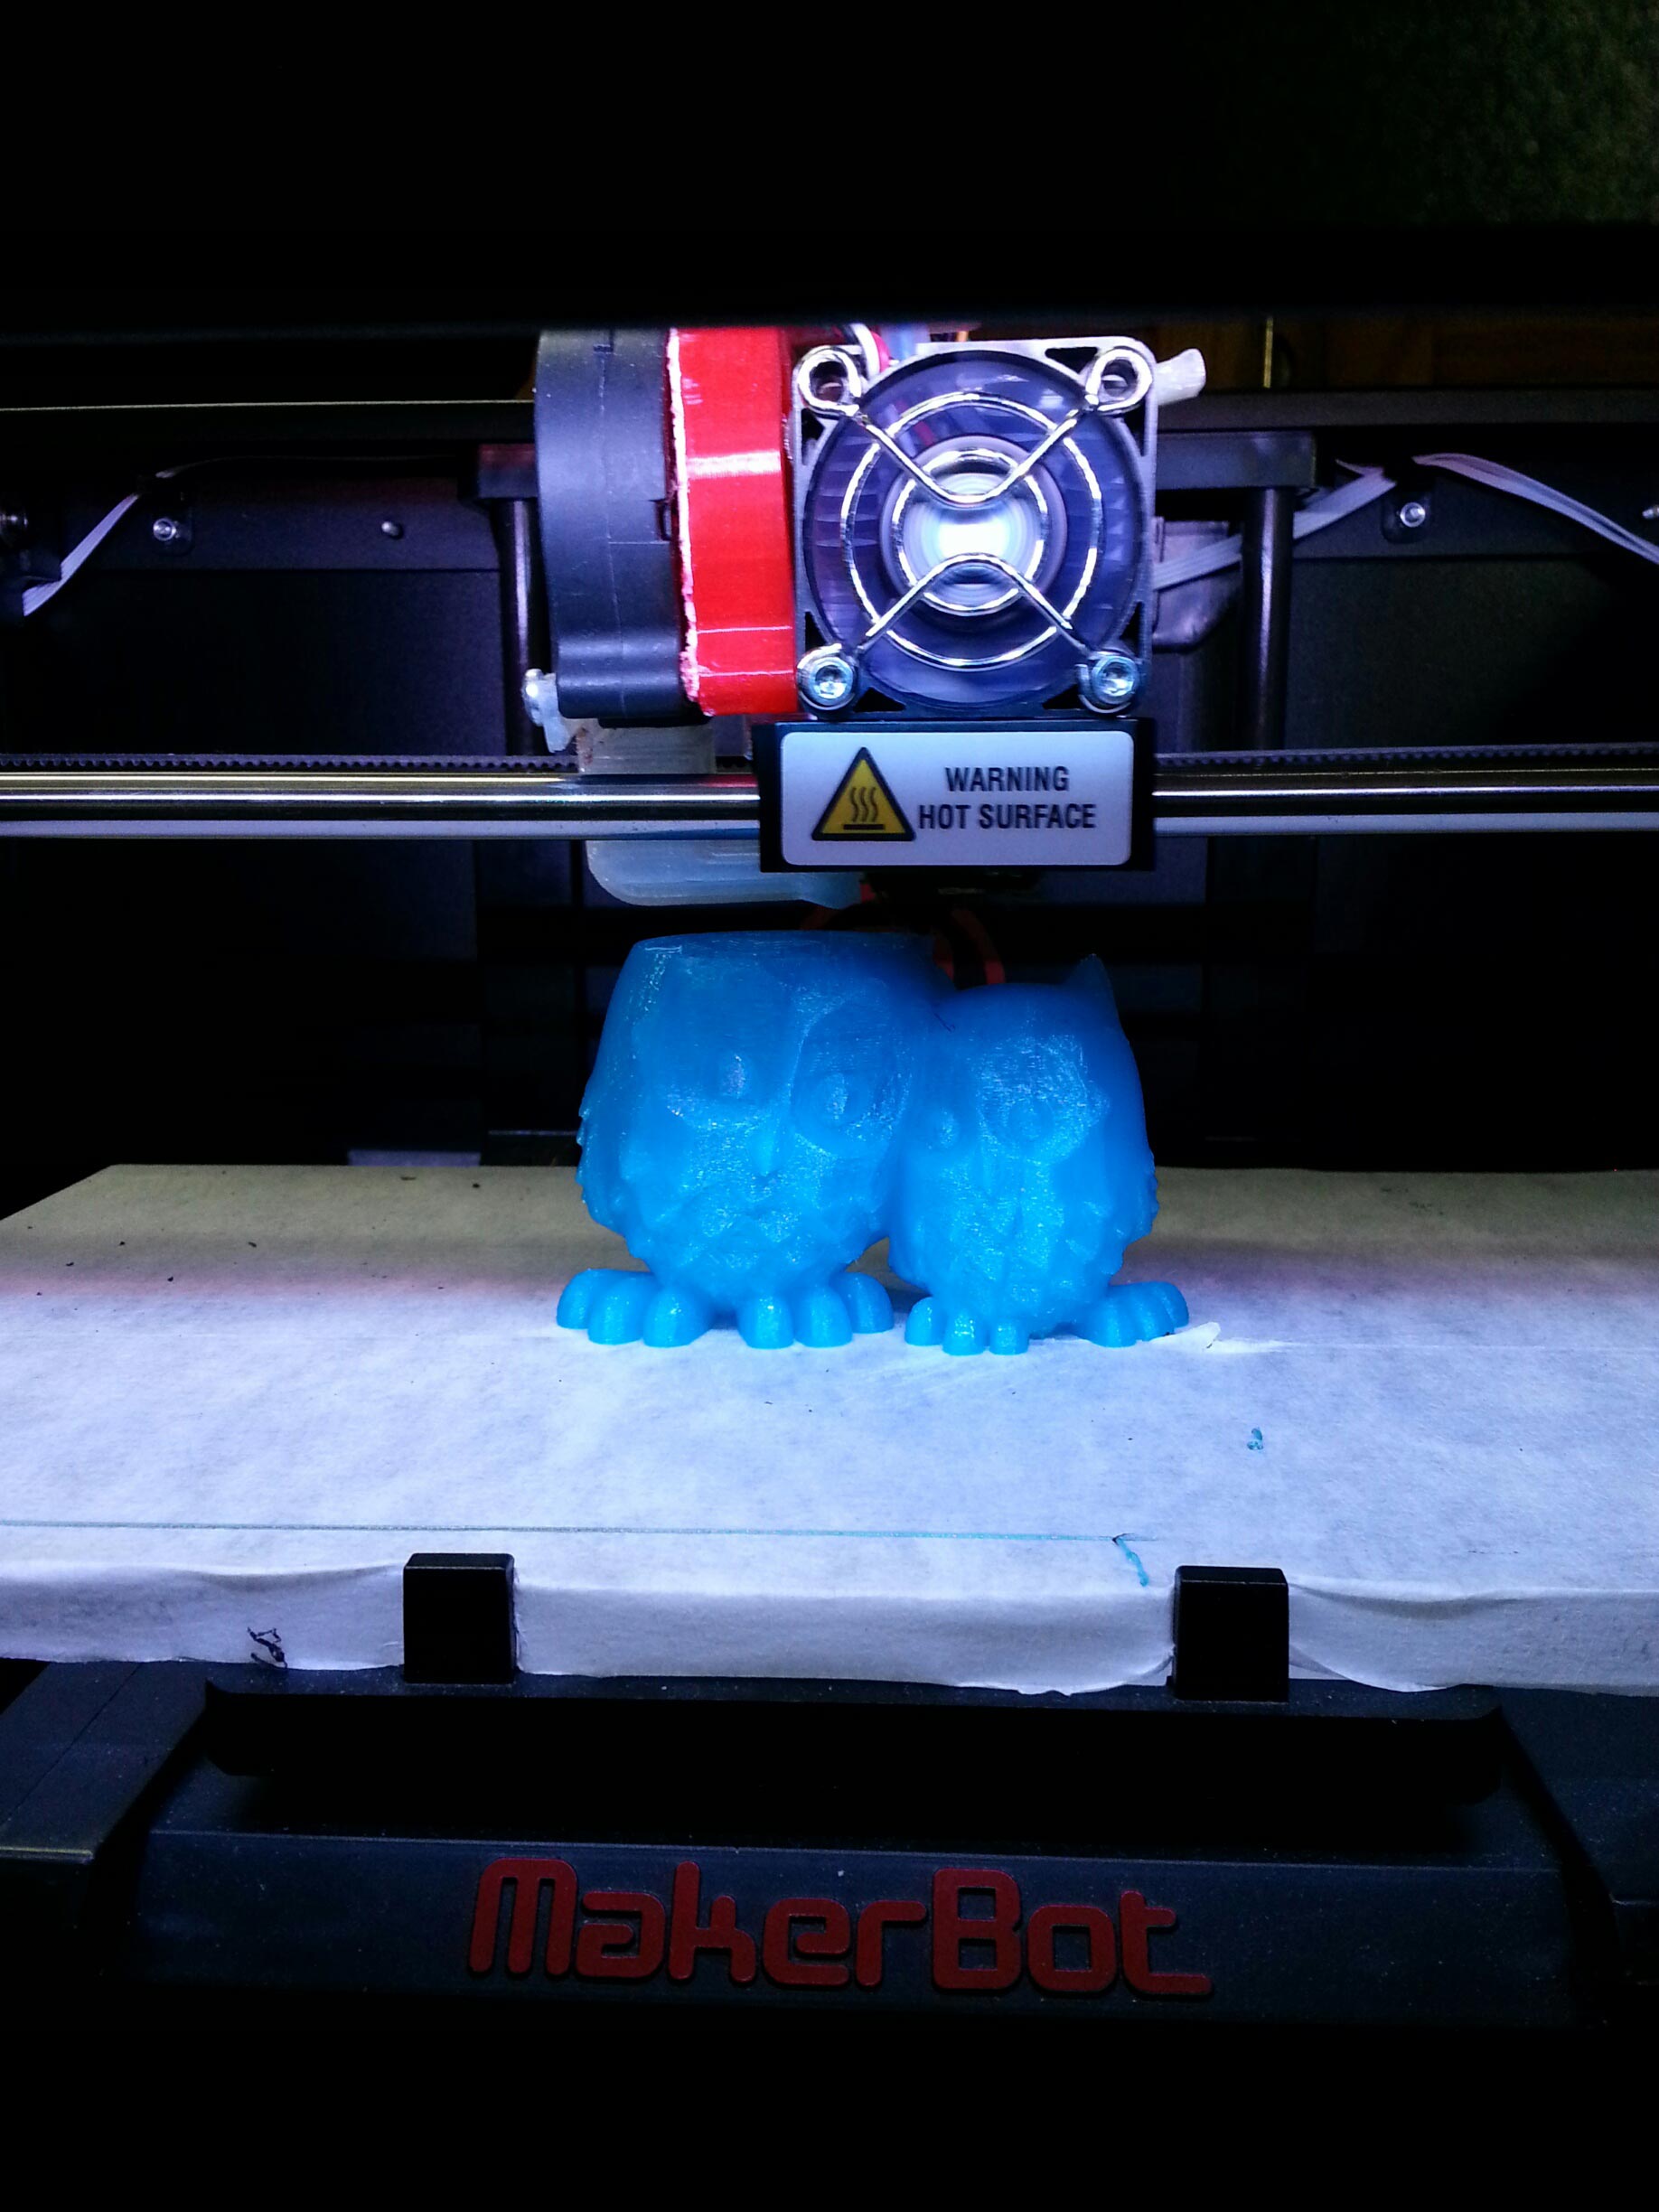 Makerbot Replicator 2-Print: Owles at extruding